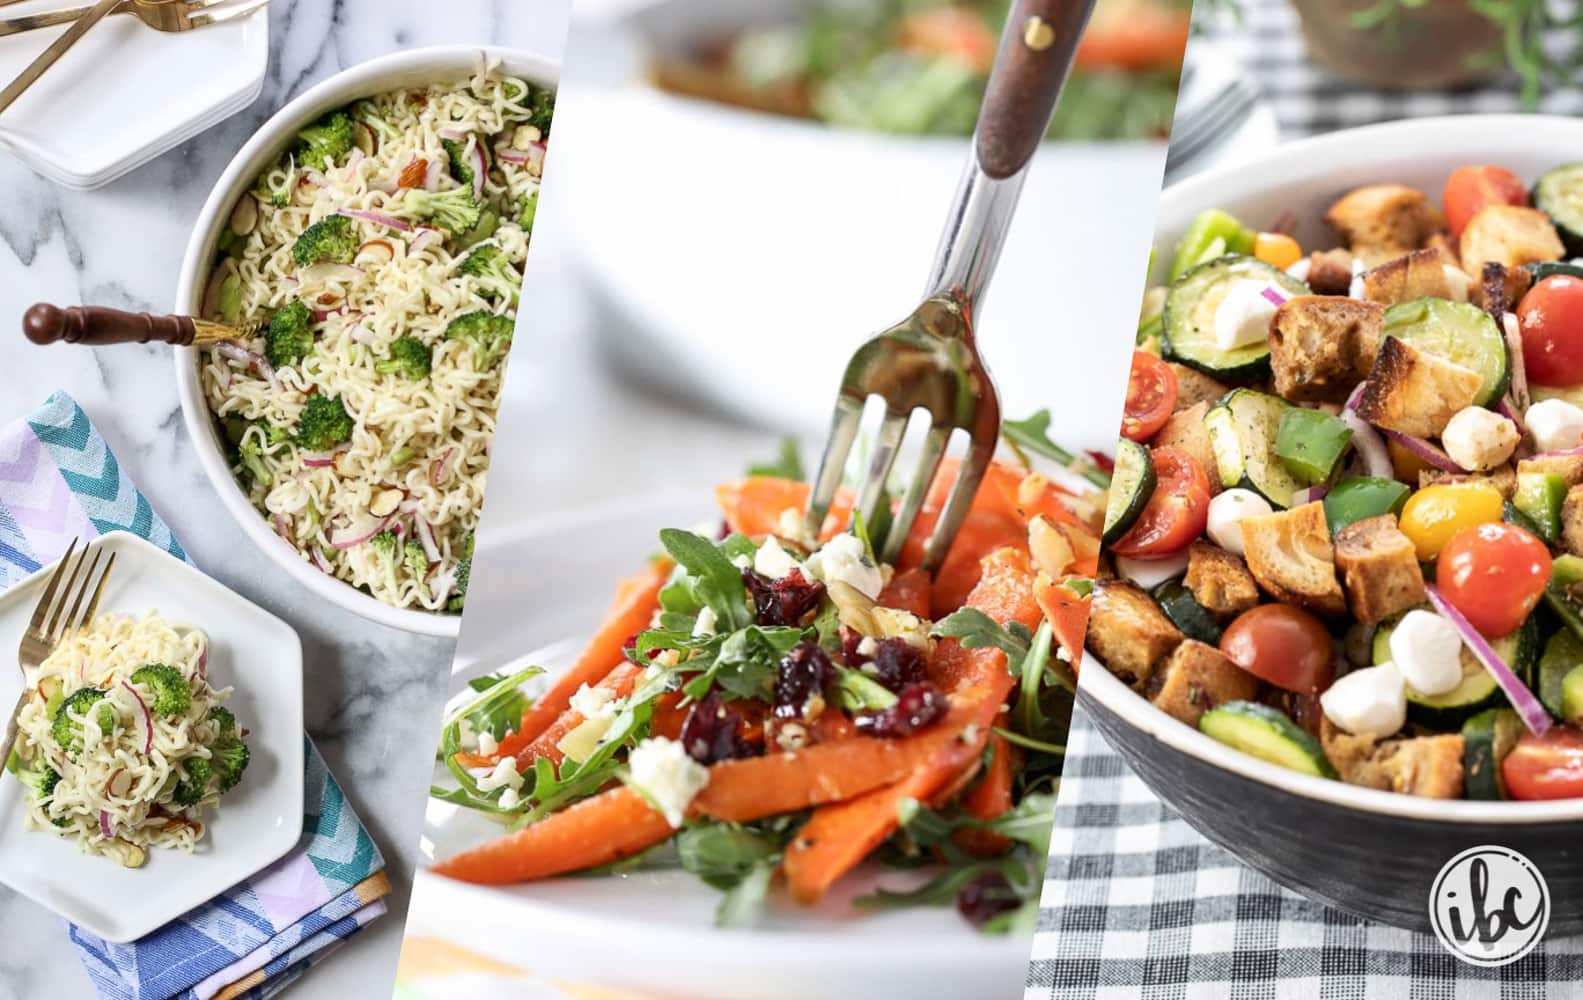 Unique and Delicious Salad Recipes #salad #recipe #lettuce #panzanella #pastasalad #pasta #potatosalad #dessertsalad